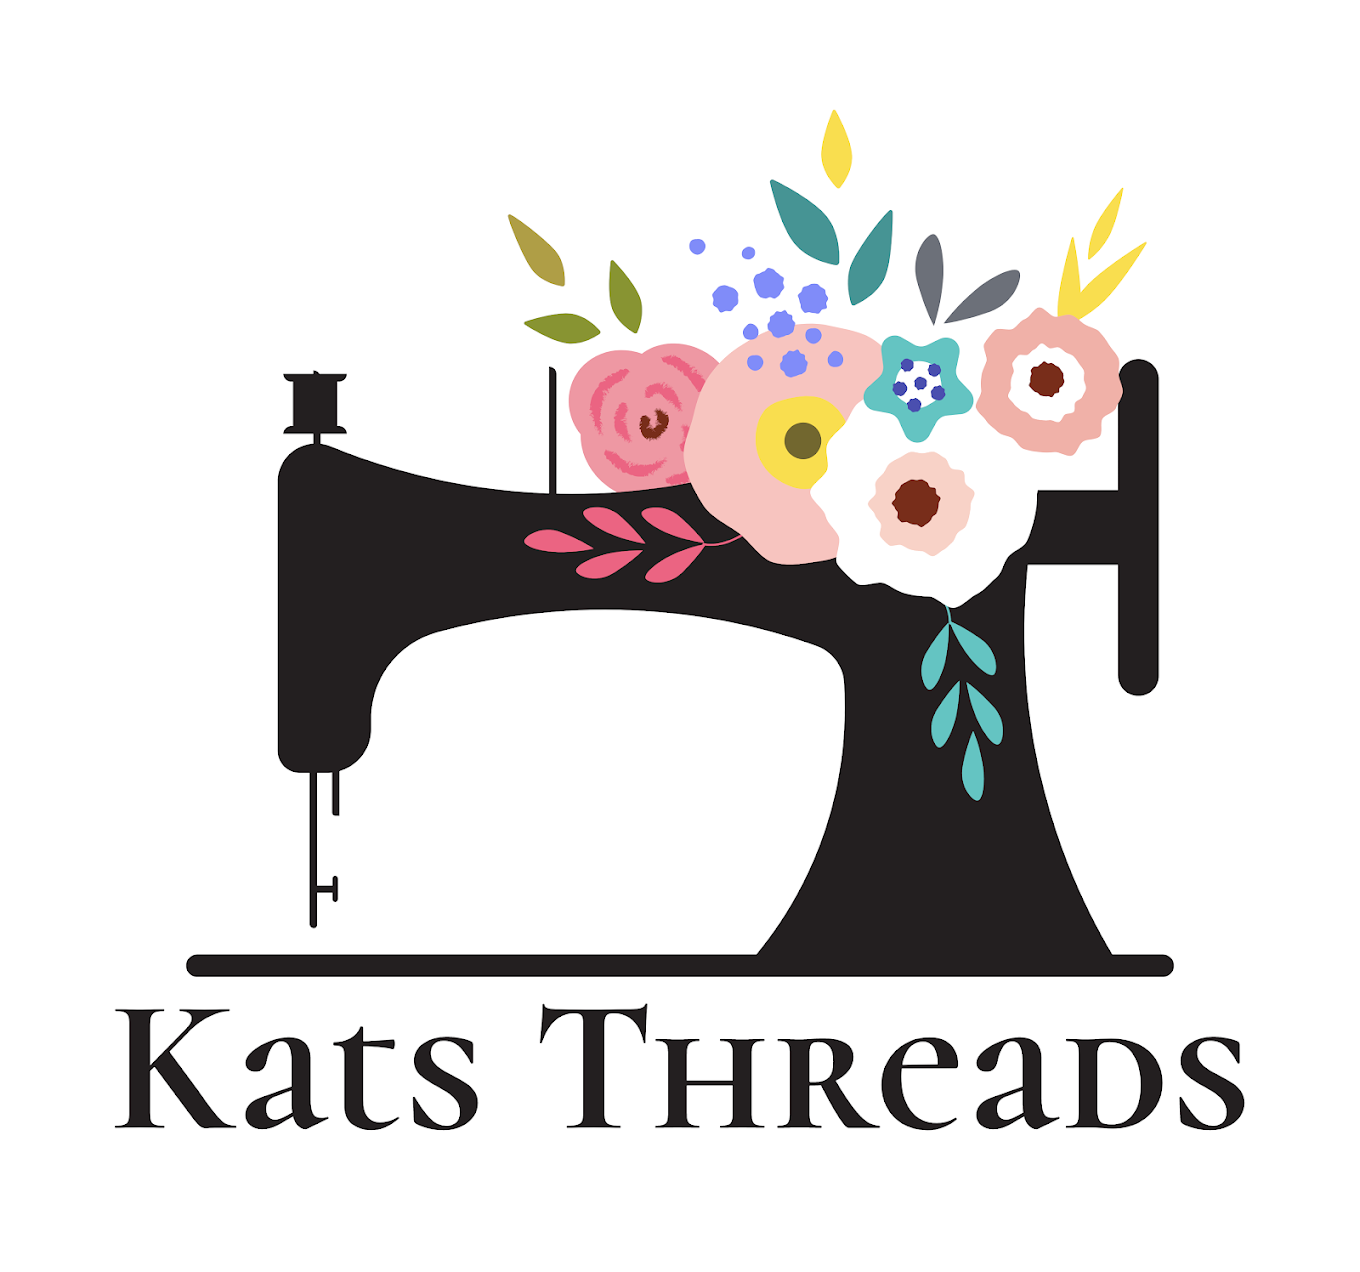 Kats Threads Store